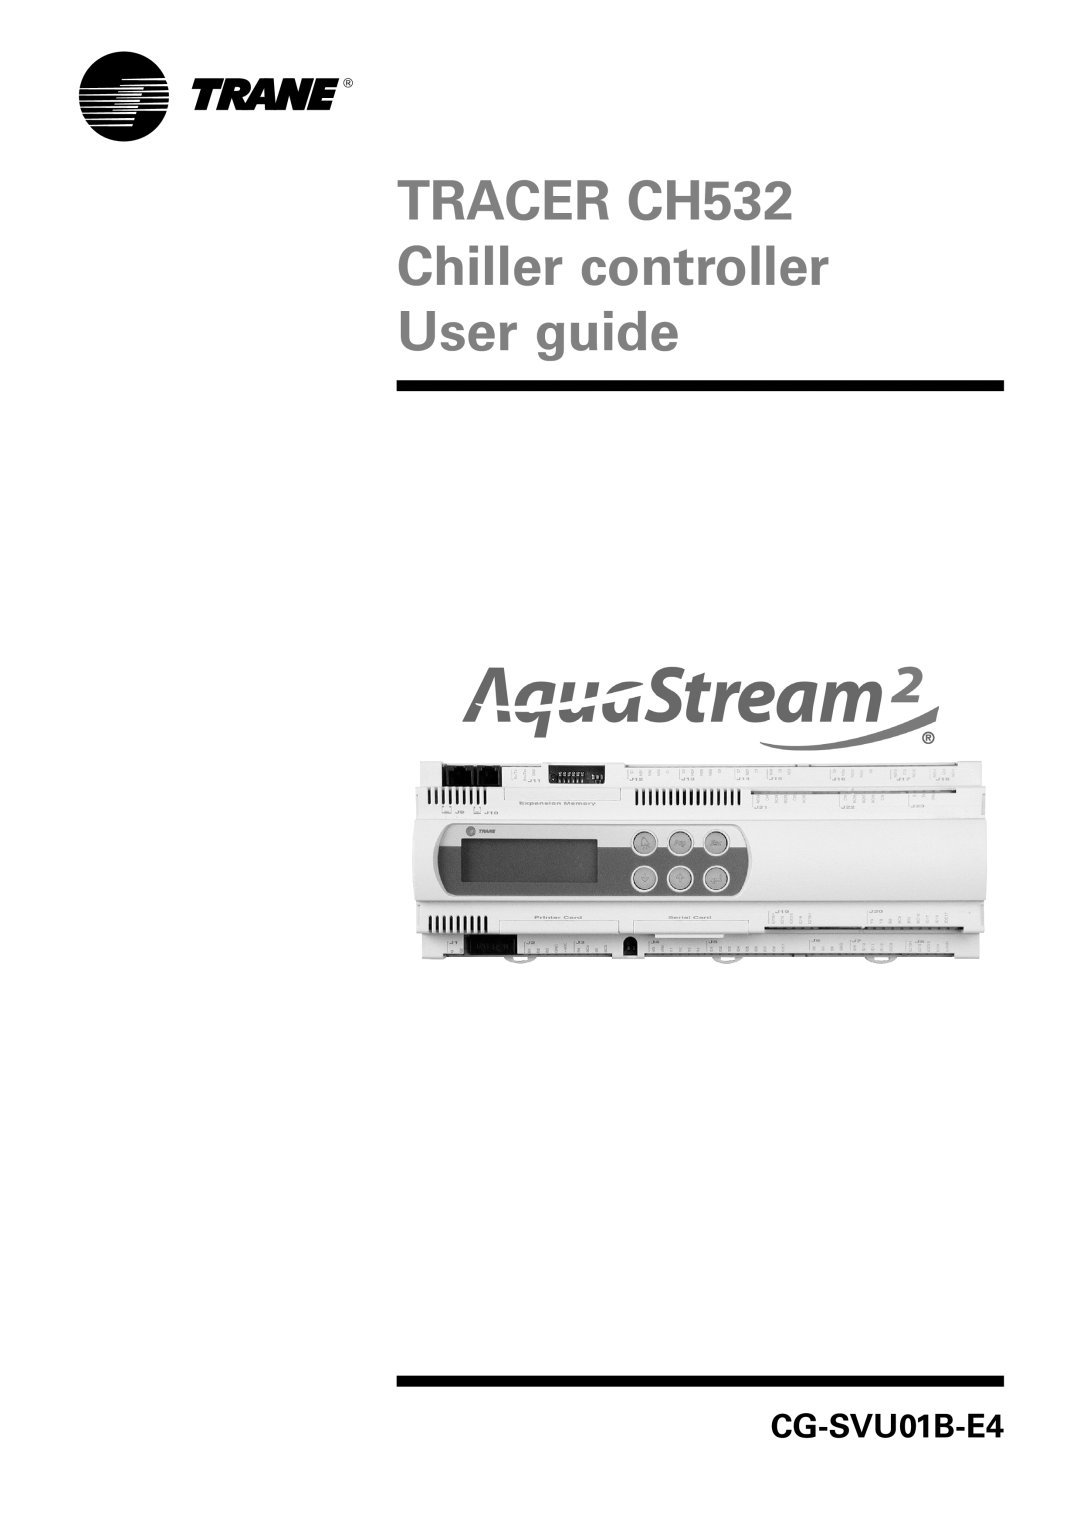 American Standard manual TRACER CH532 Chiller controller User guide, CG-SVU01B-E4 